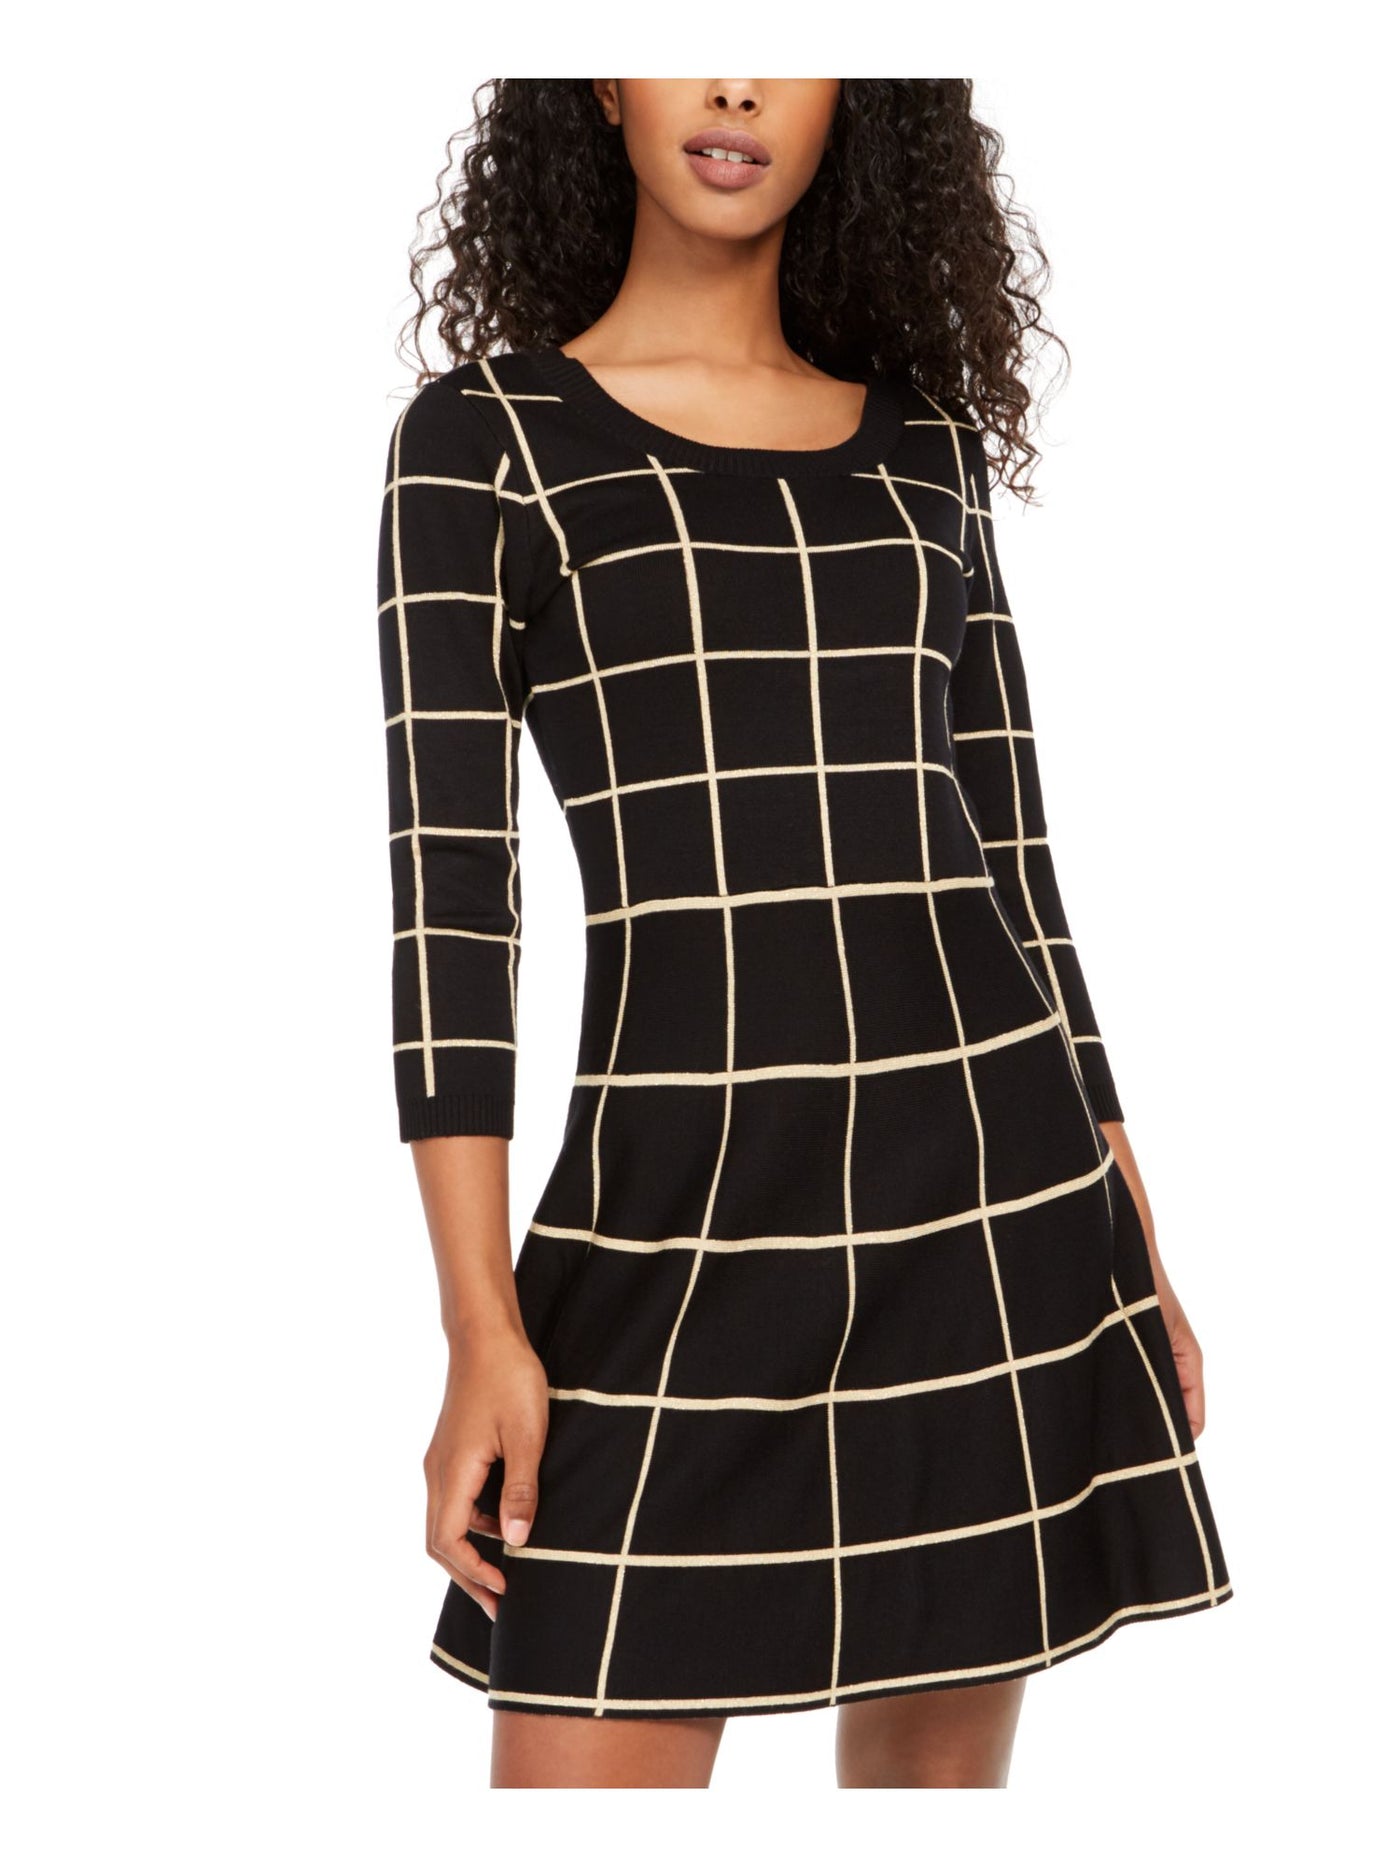 MY MICHELLE Womens Black Check 3/4 Sleeve Jewel Neck Short Fit + Flare Dress Juniors XS